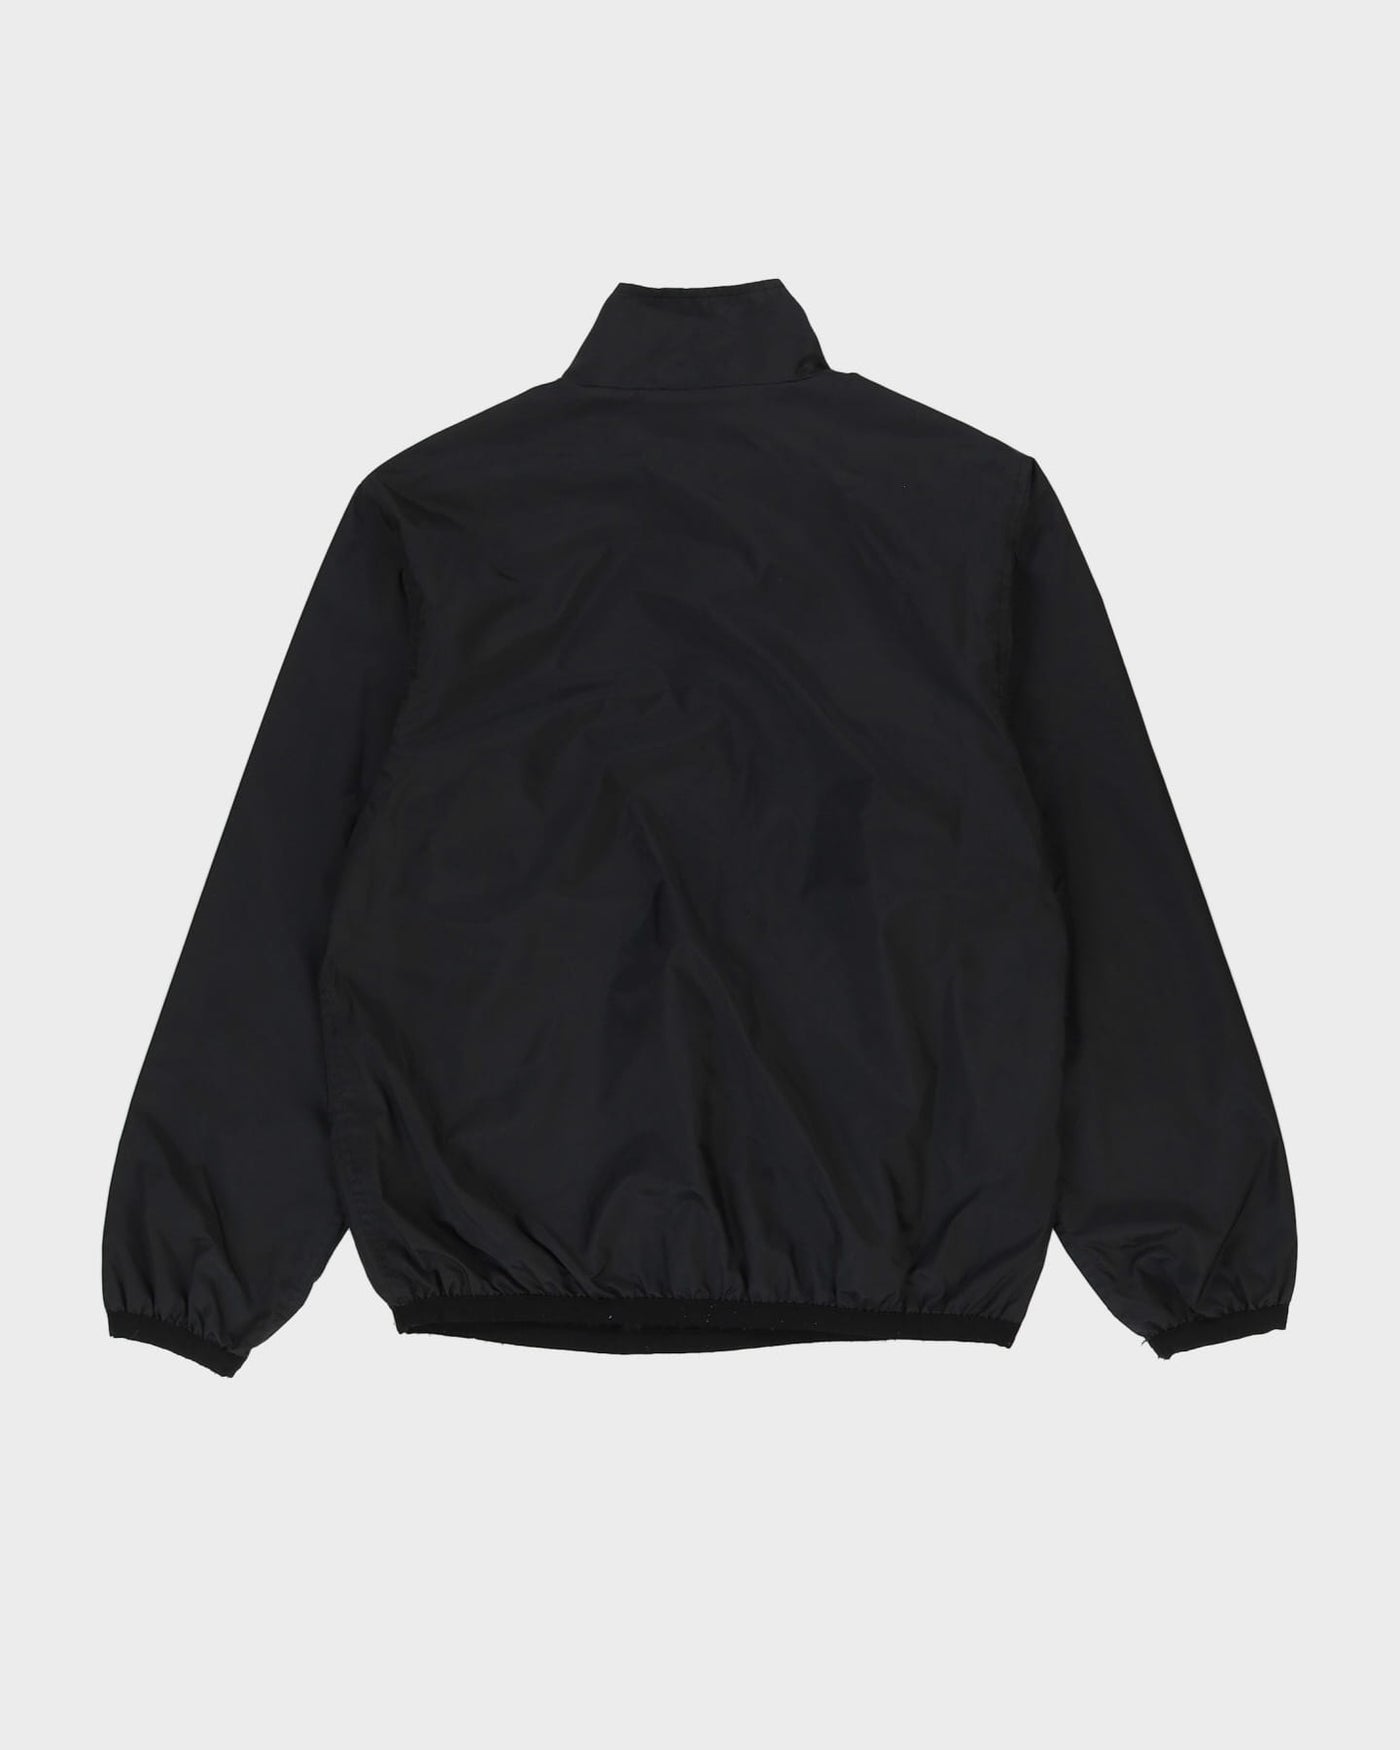 DKNY Black Quarter-Zip Windbreaker Jacket - M